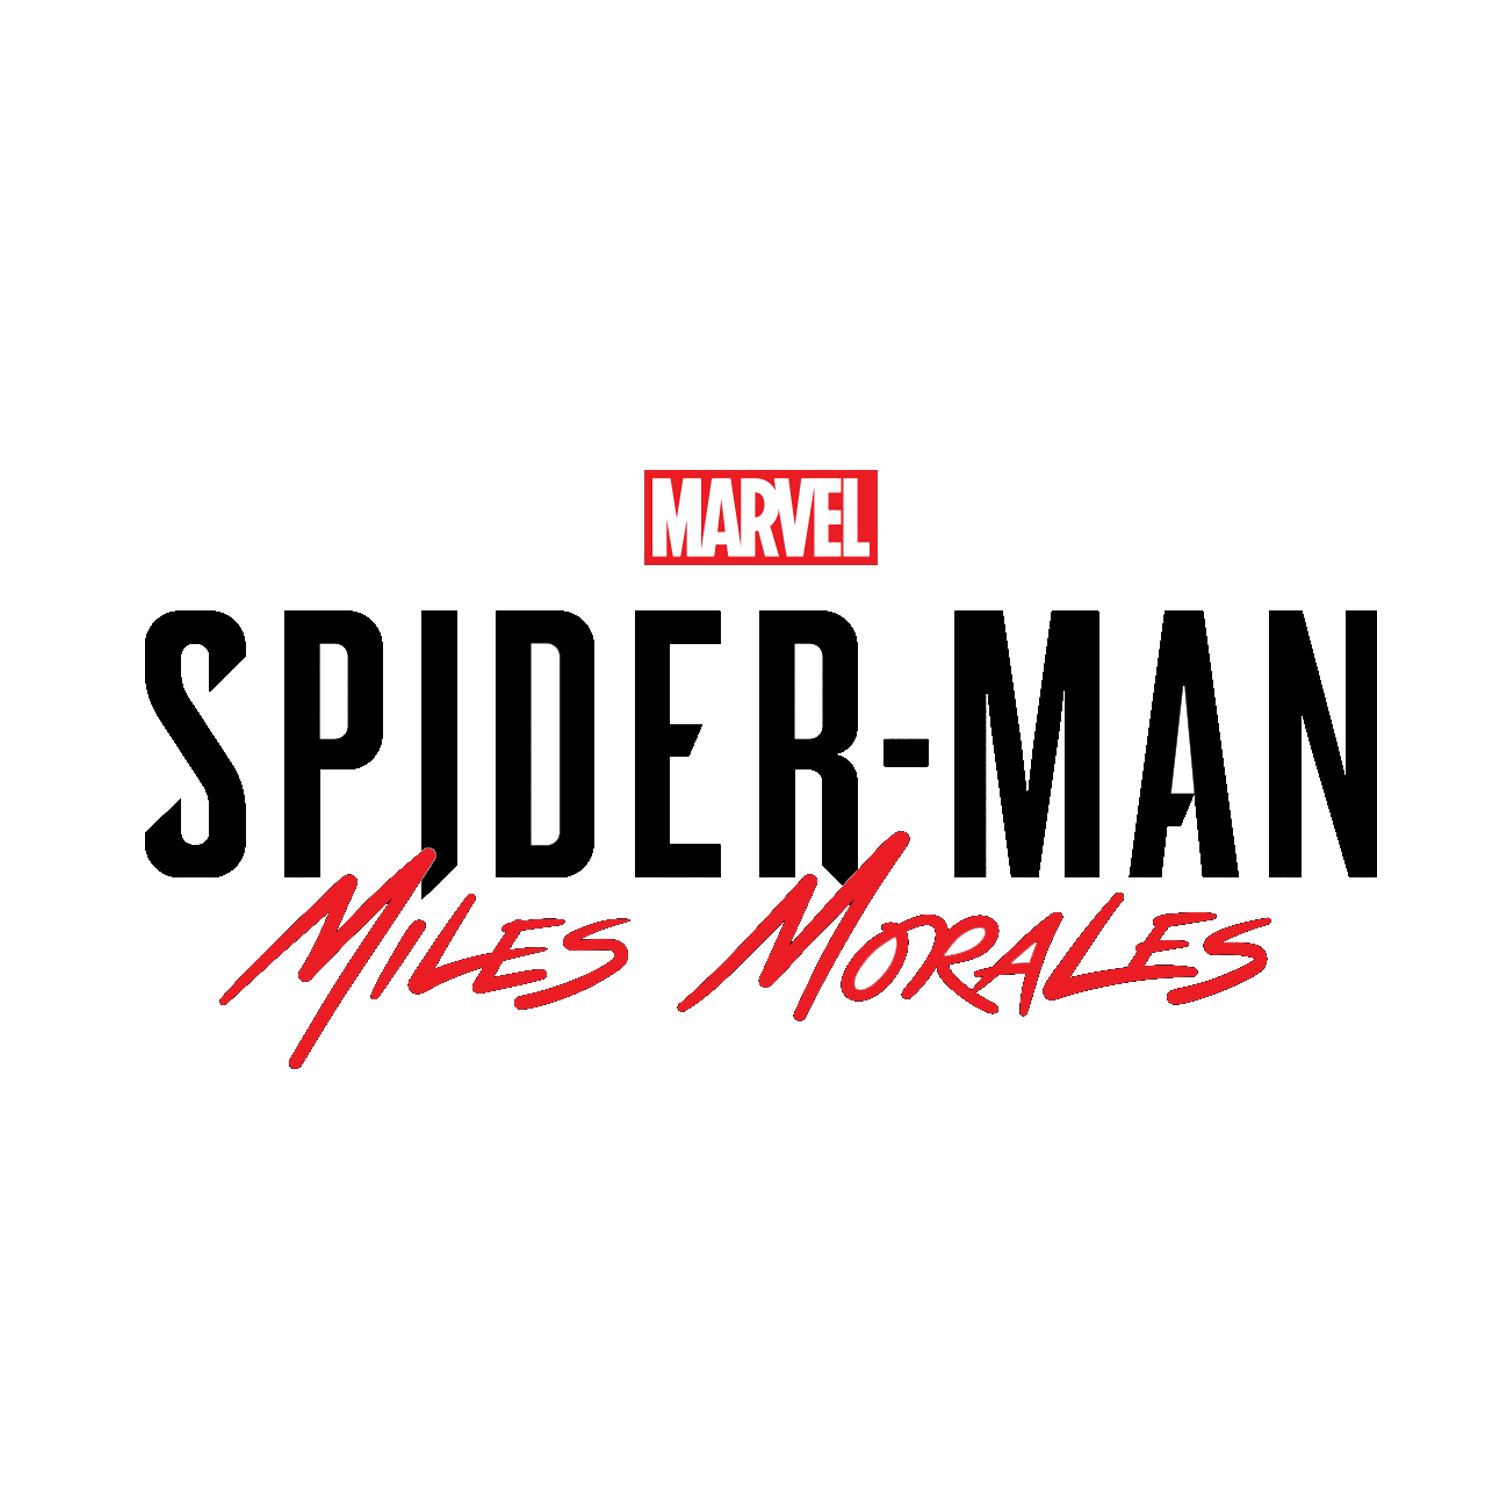 Marvel Spiderman Game logo